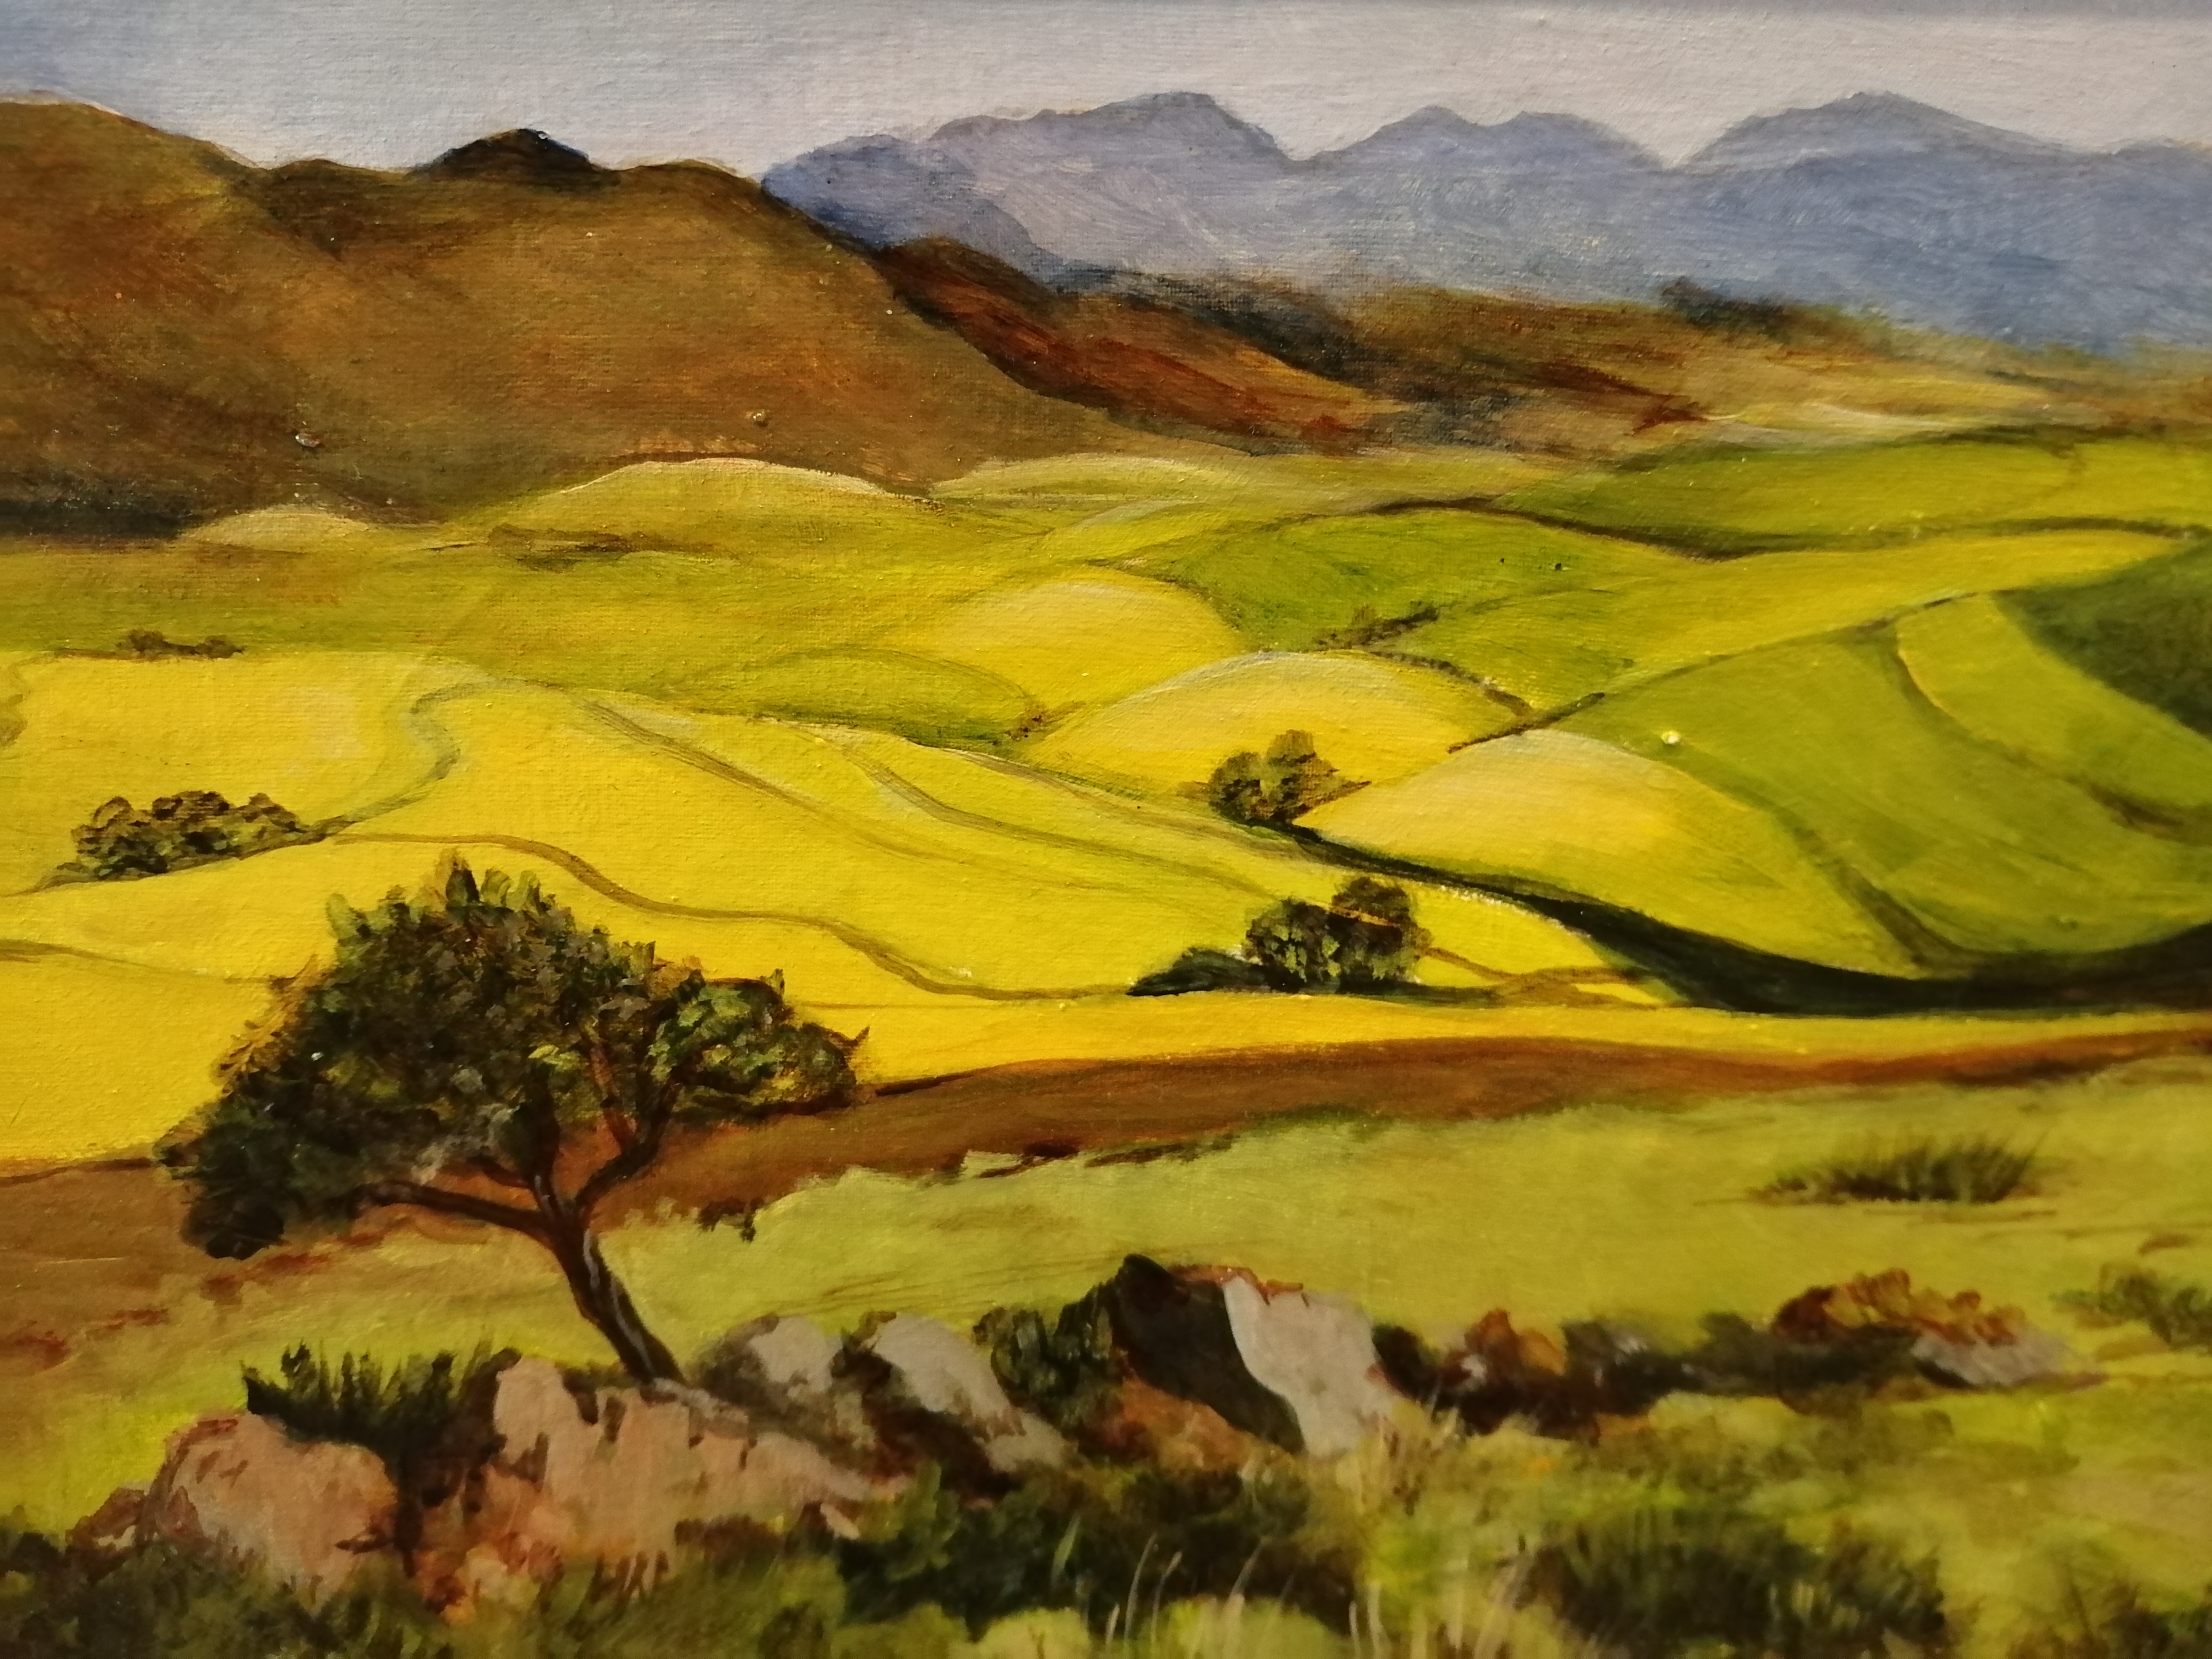 "Canola fields, Overberg" by Alyson Guy